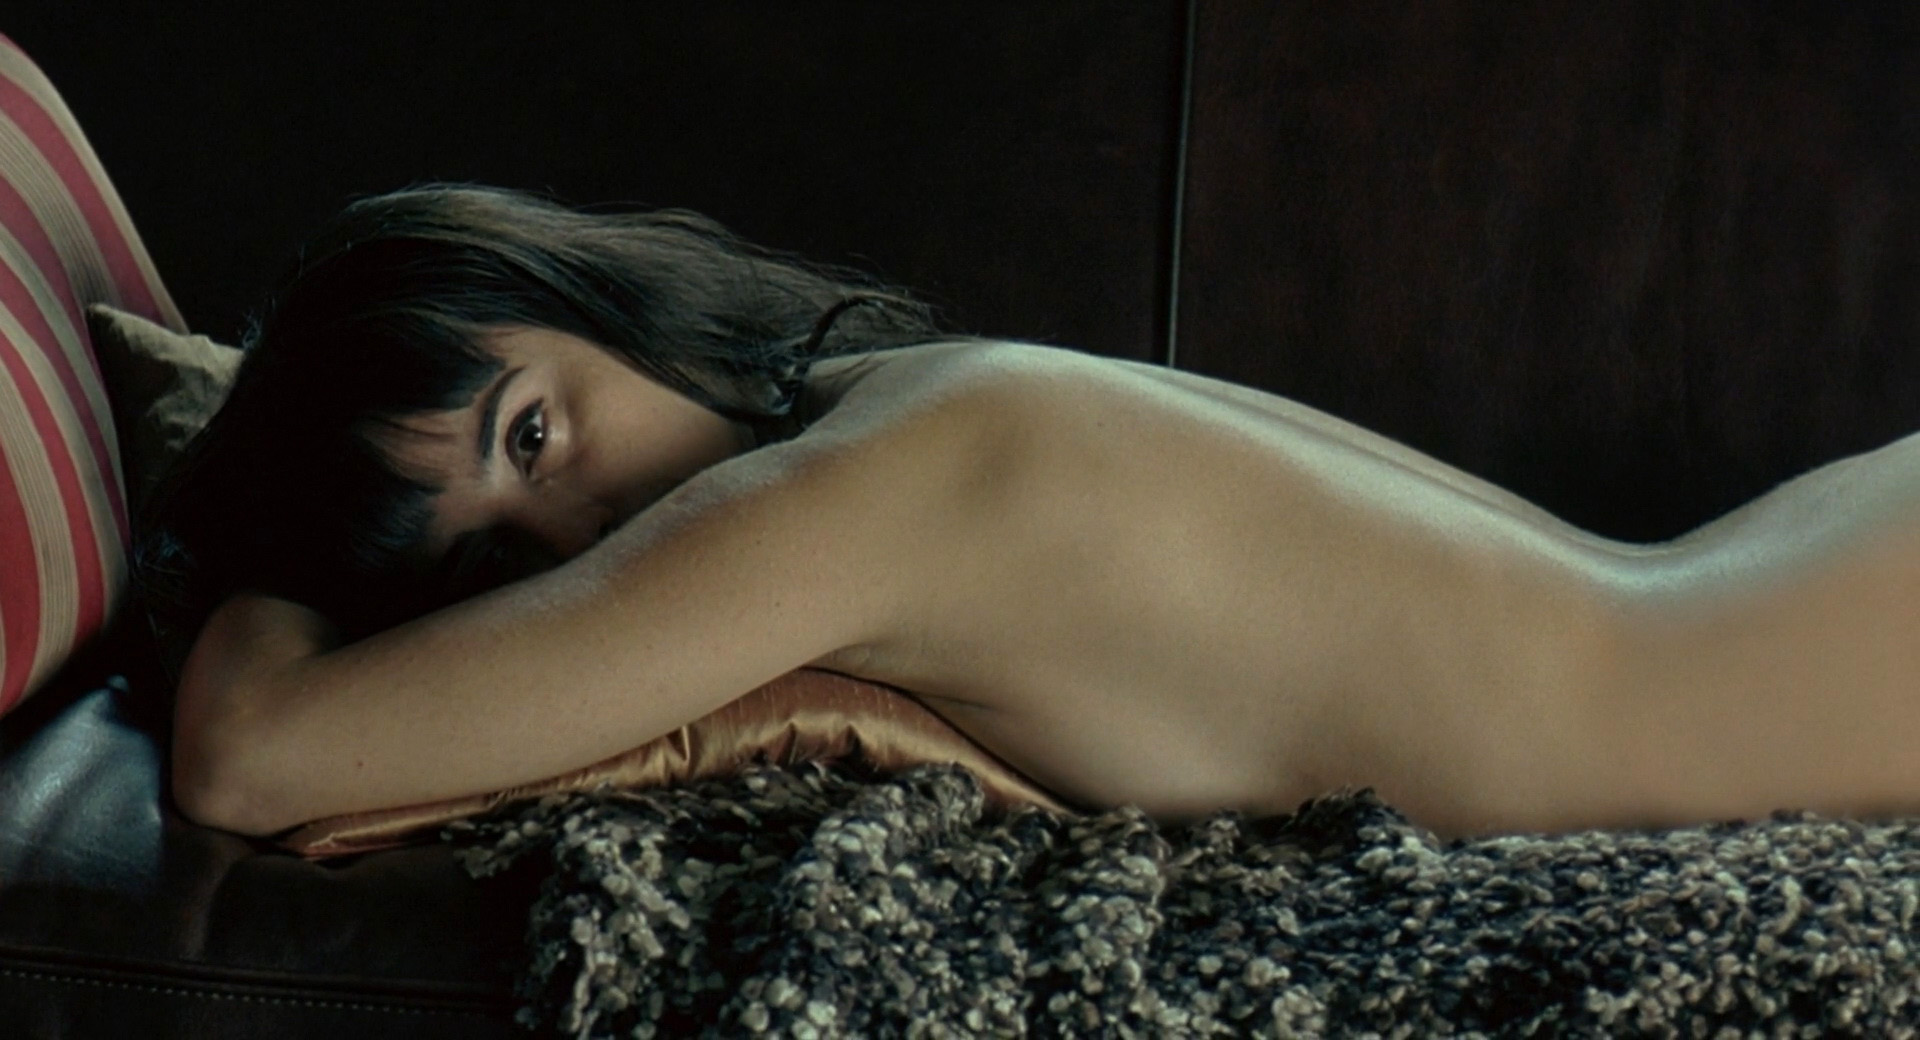 Penelope cruz sexy nude scenes image